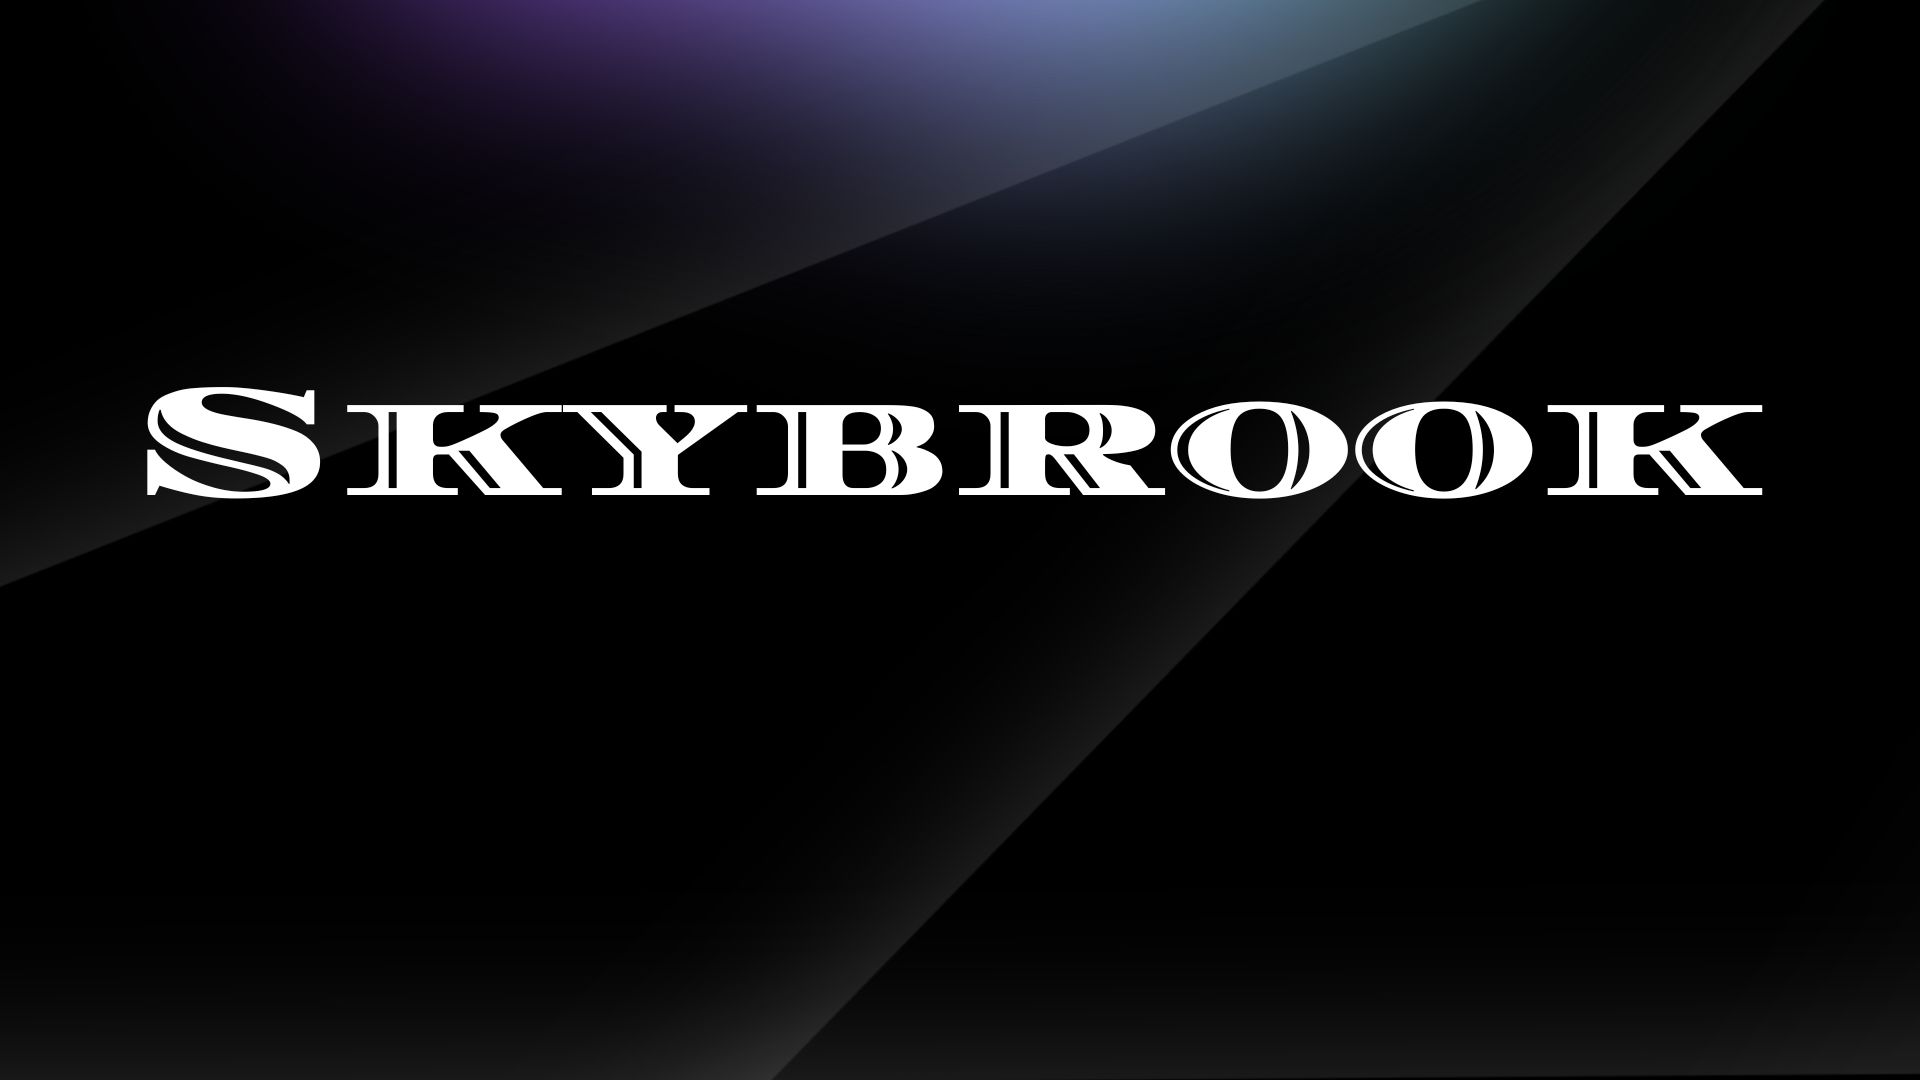 Skybrook #424/1000